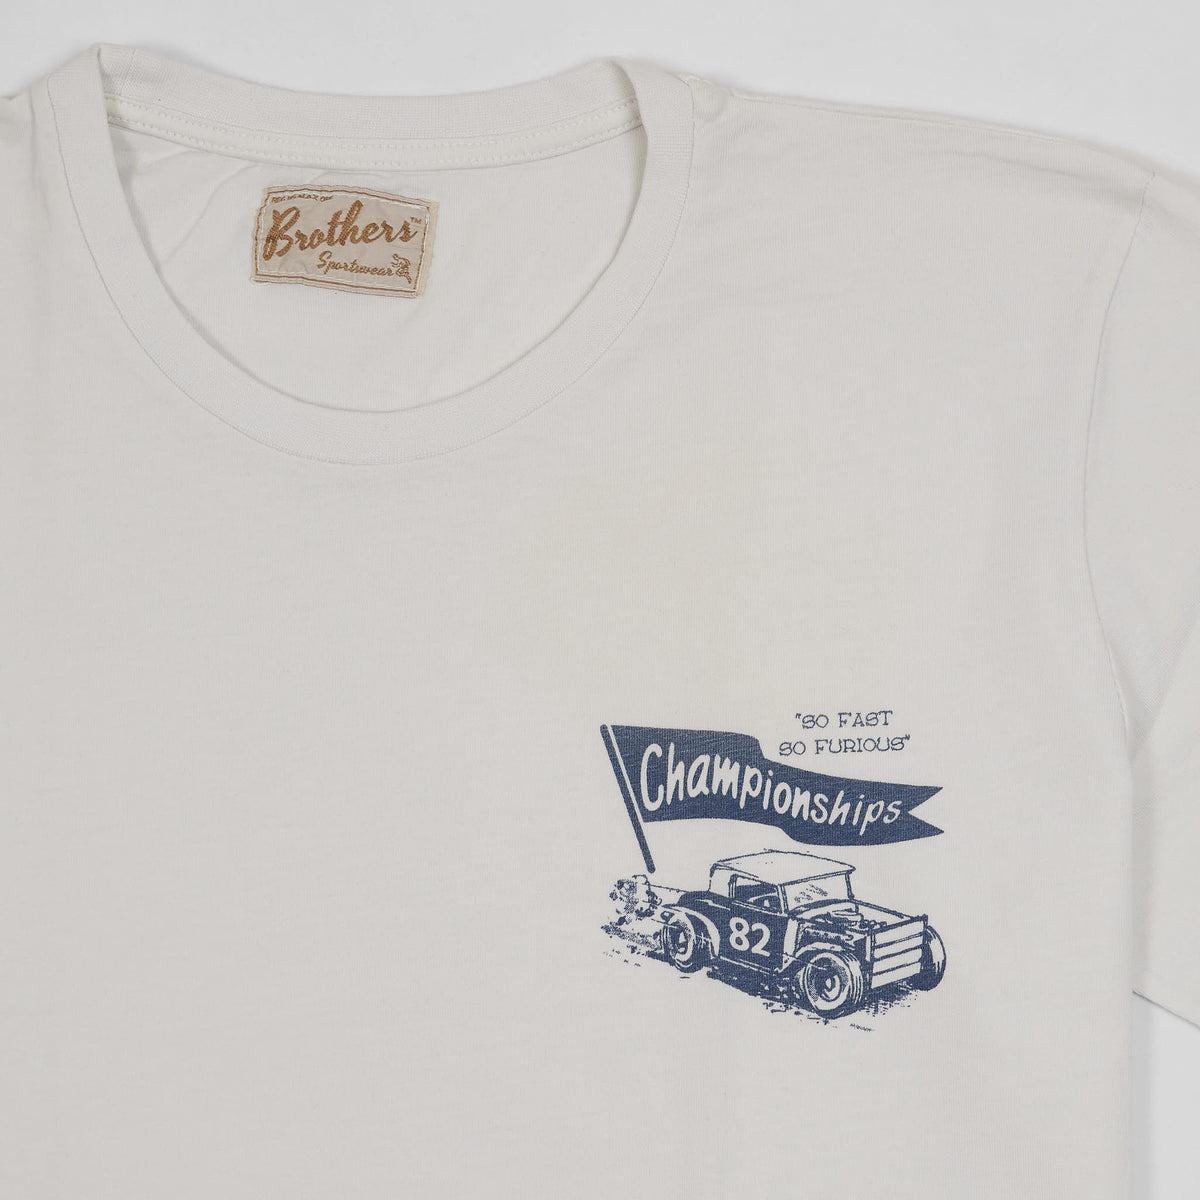 Brothers Sportswear Printed Short Sleeve Crew Neck T-Shirt